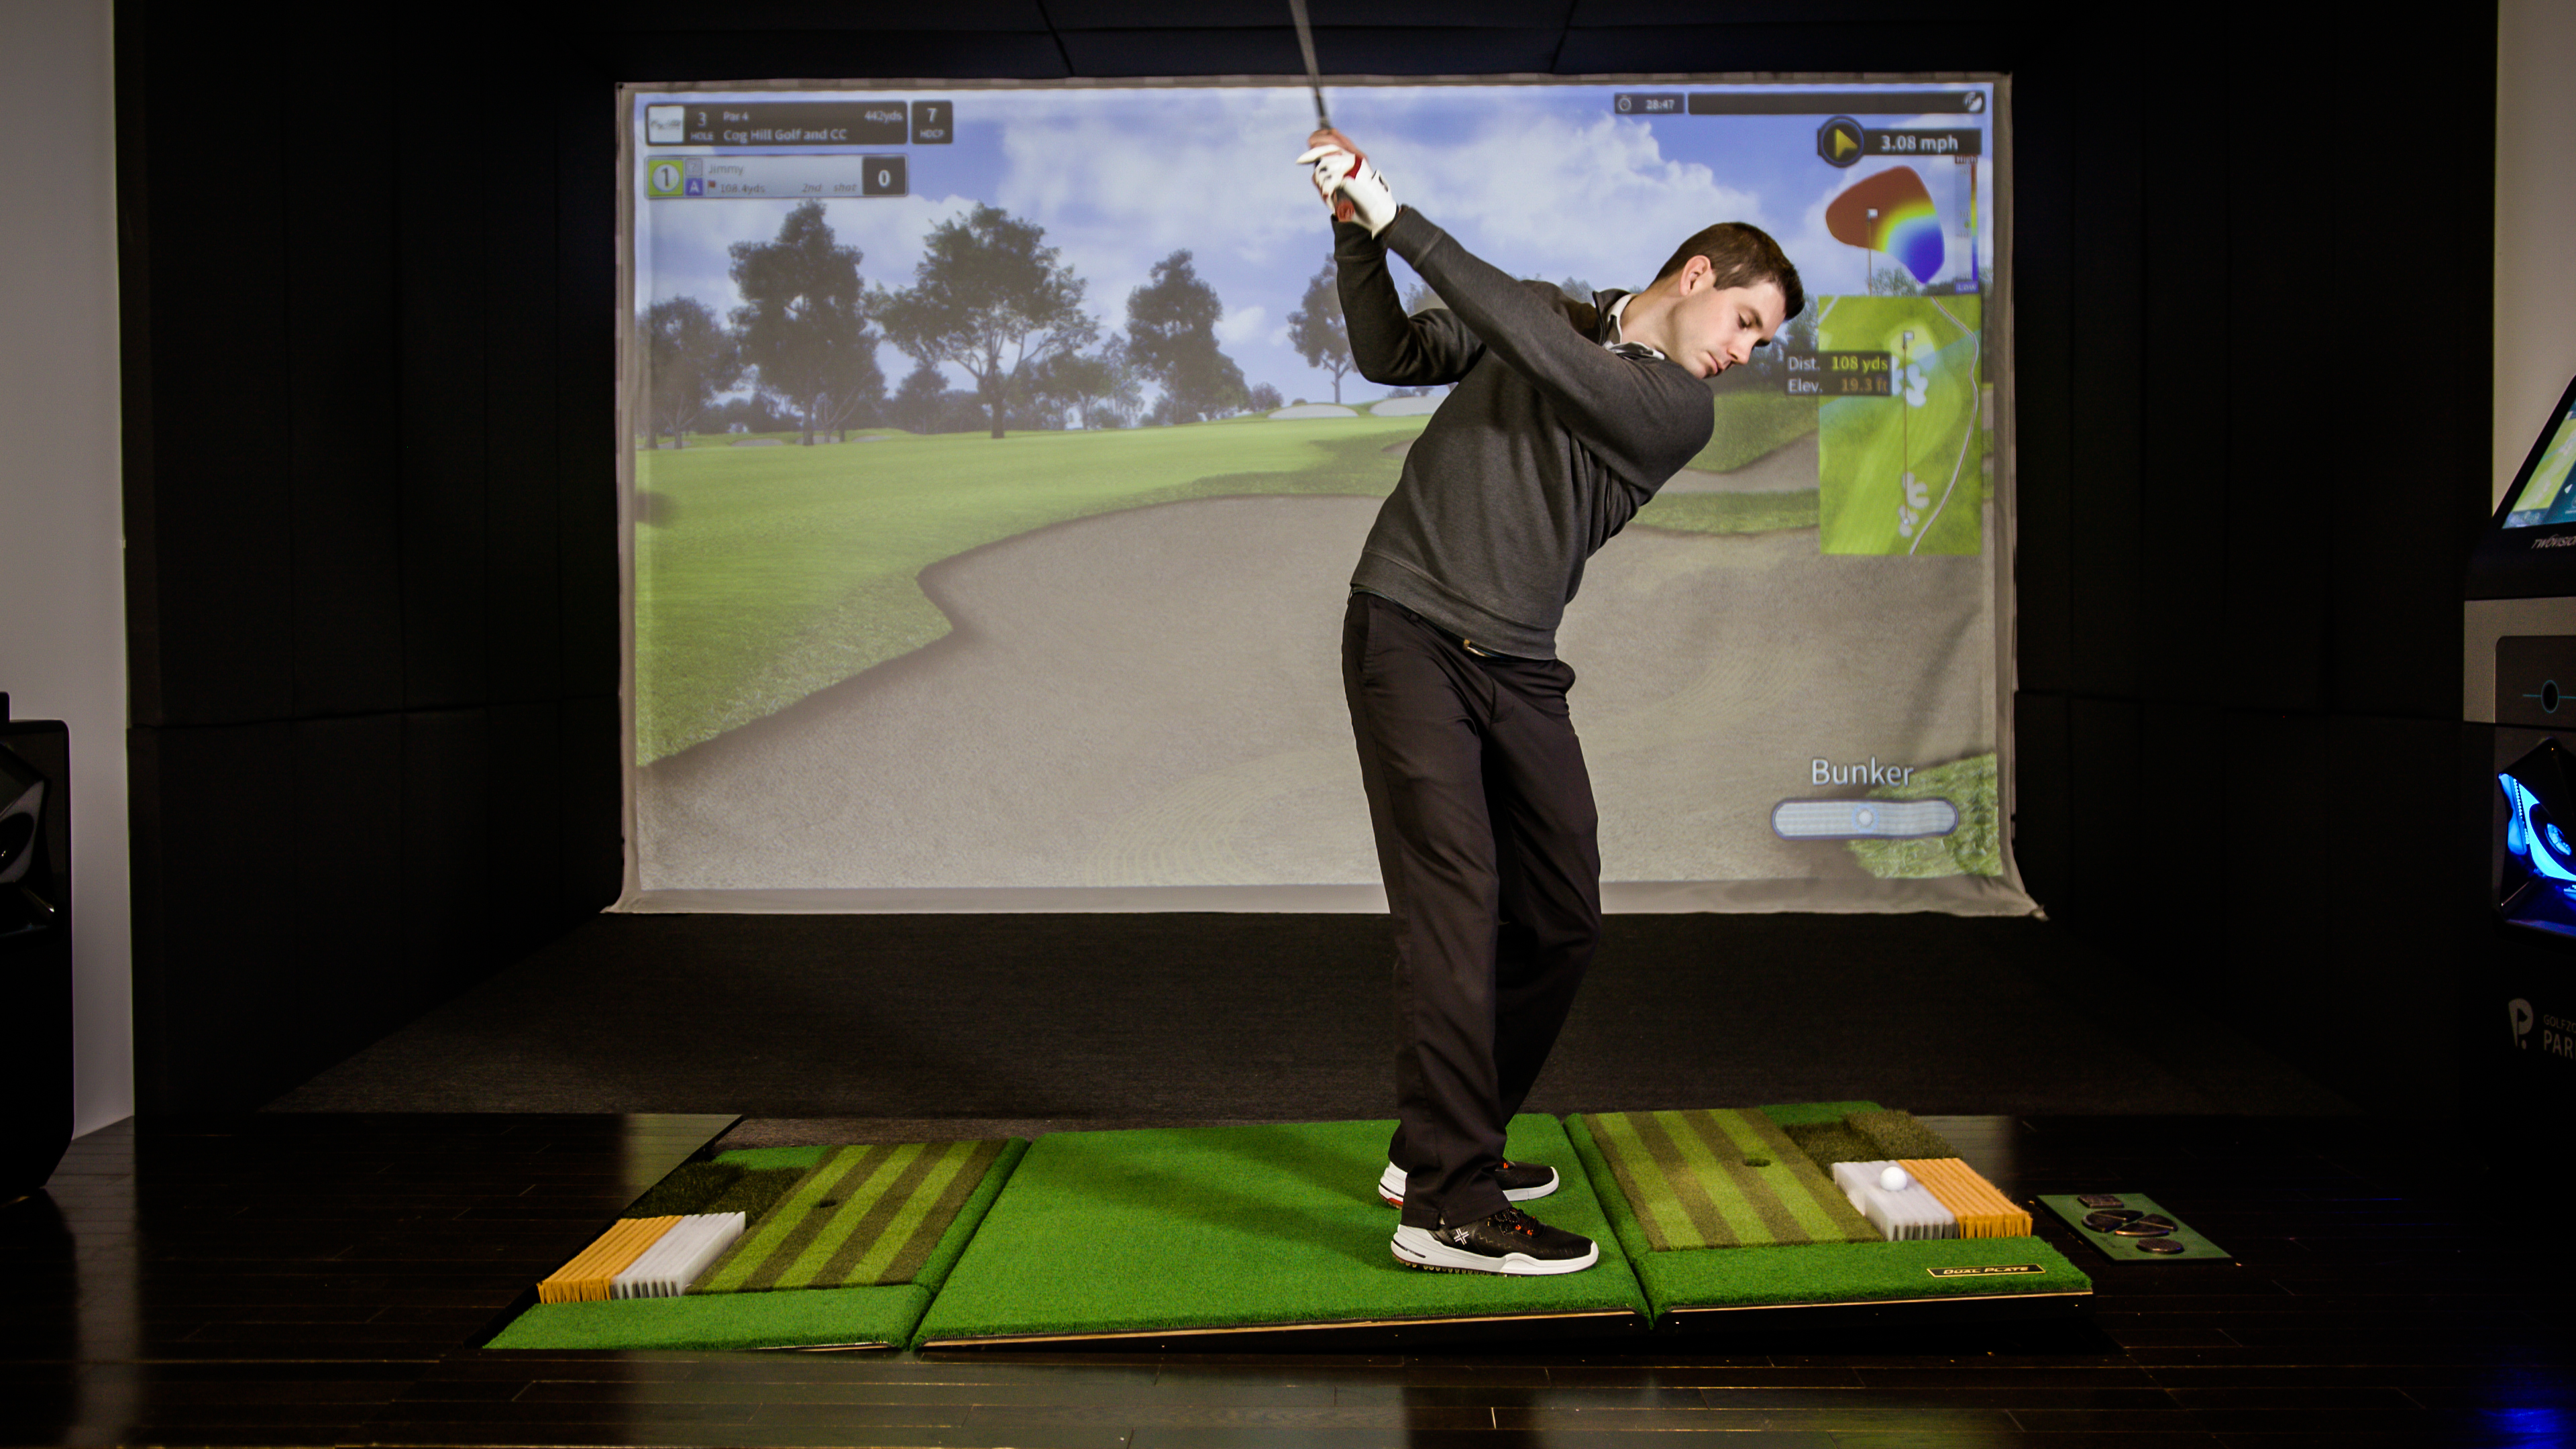 Man swinging golf club for Golfzon’s Twovision golf simulator.